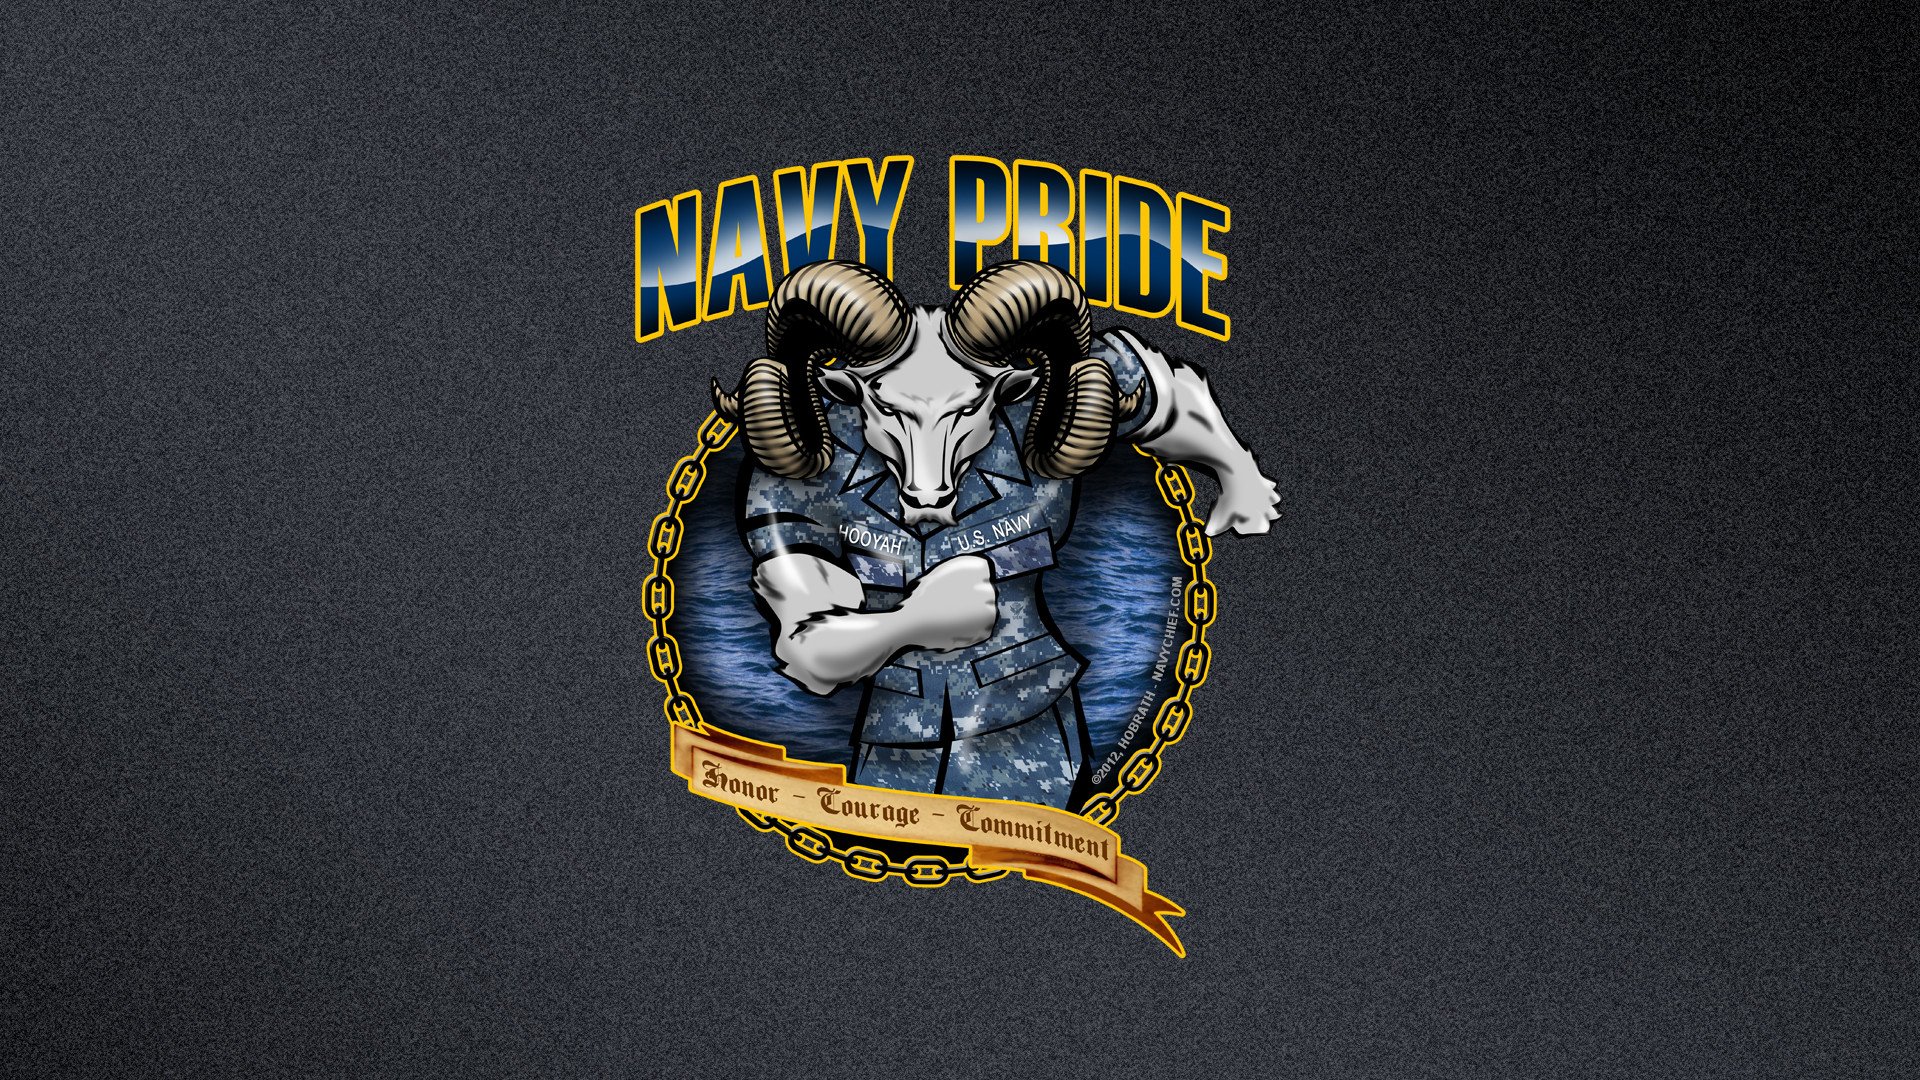 Navy Seal Logo Wallpaper images